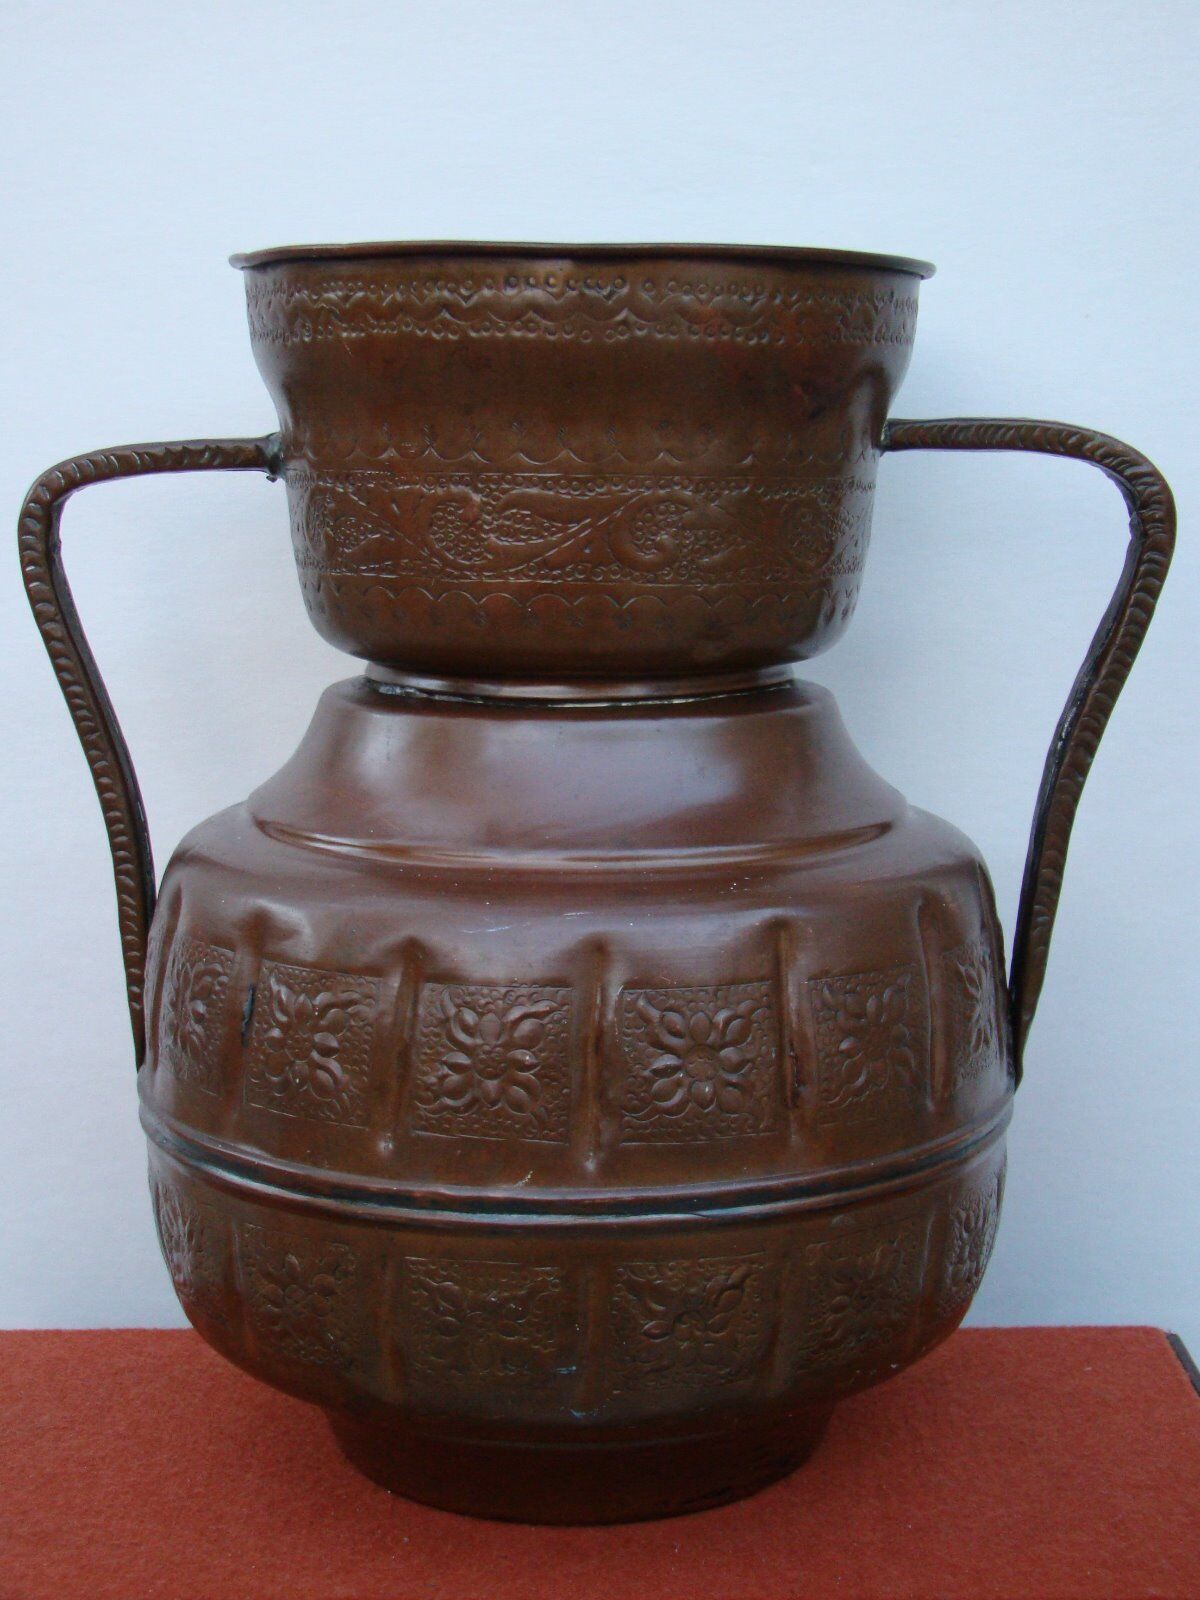 Antique/Old Vintage Copper Handmade Ornate Arabic/Persian/Islamic Pitcher/Jug